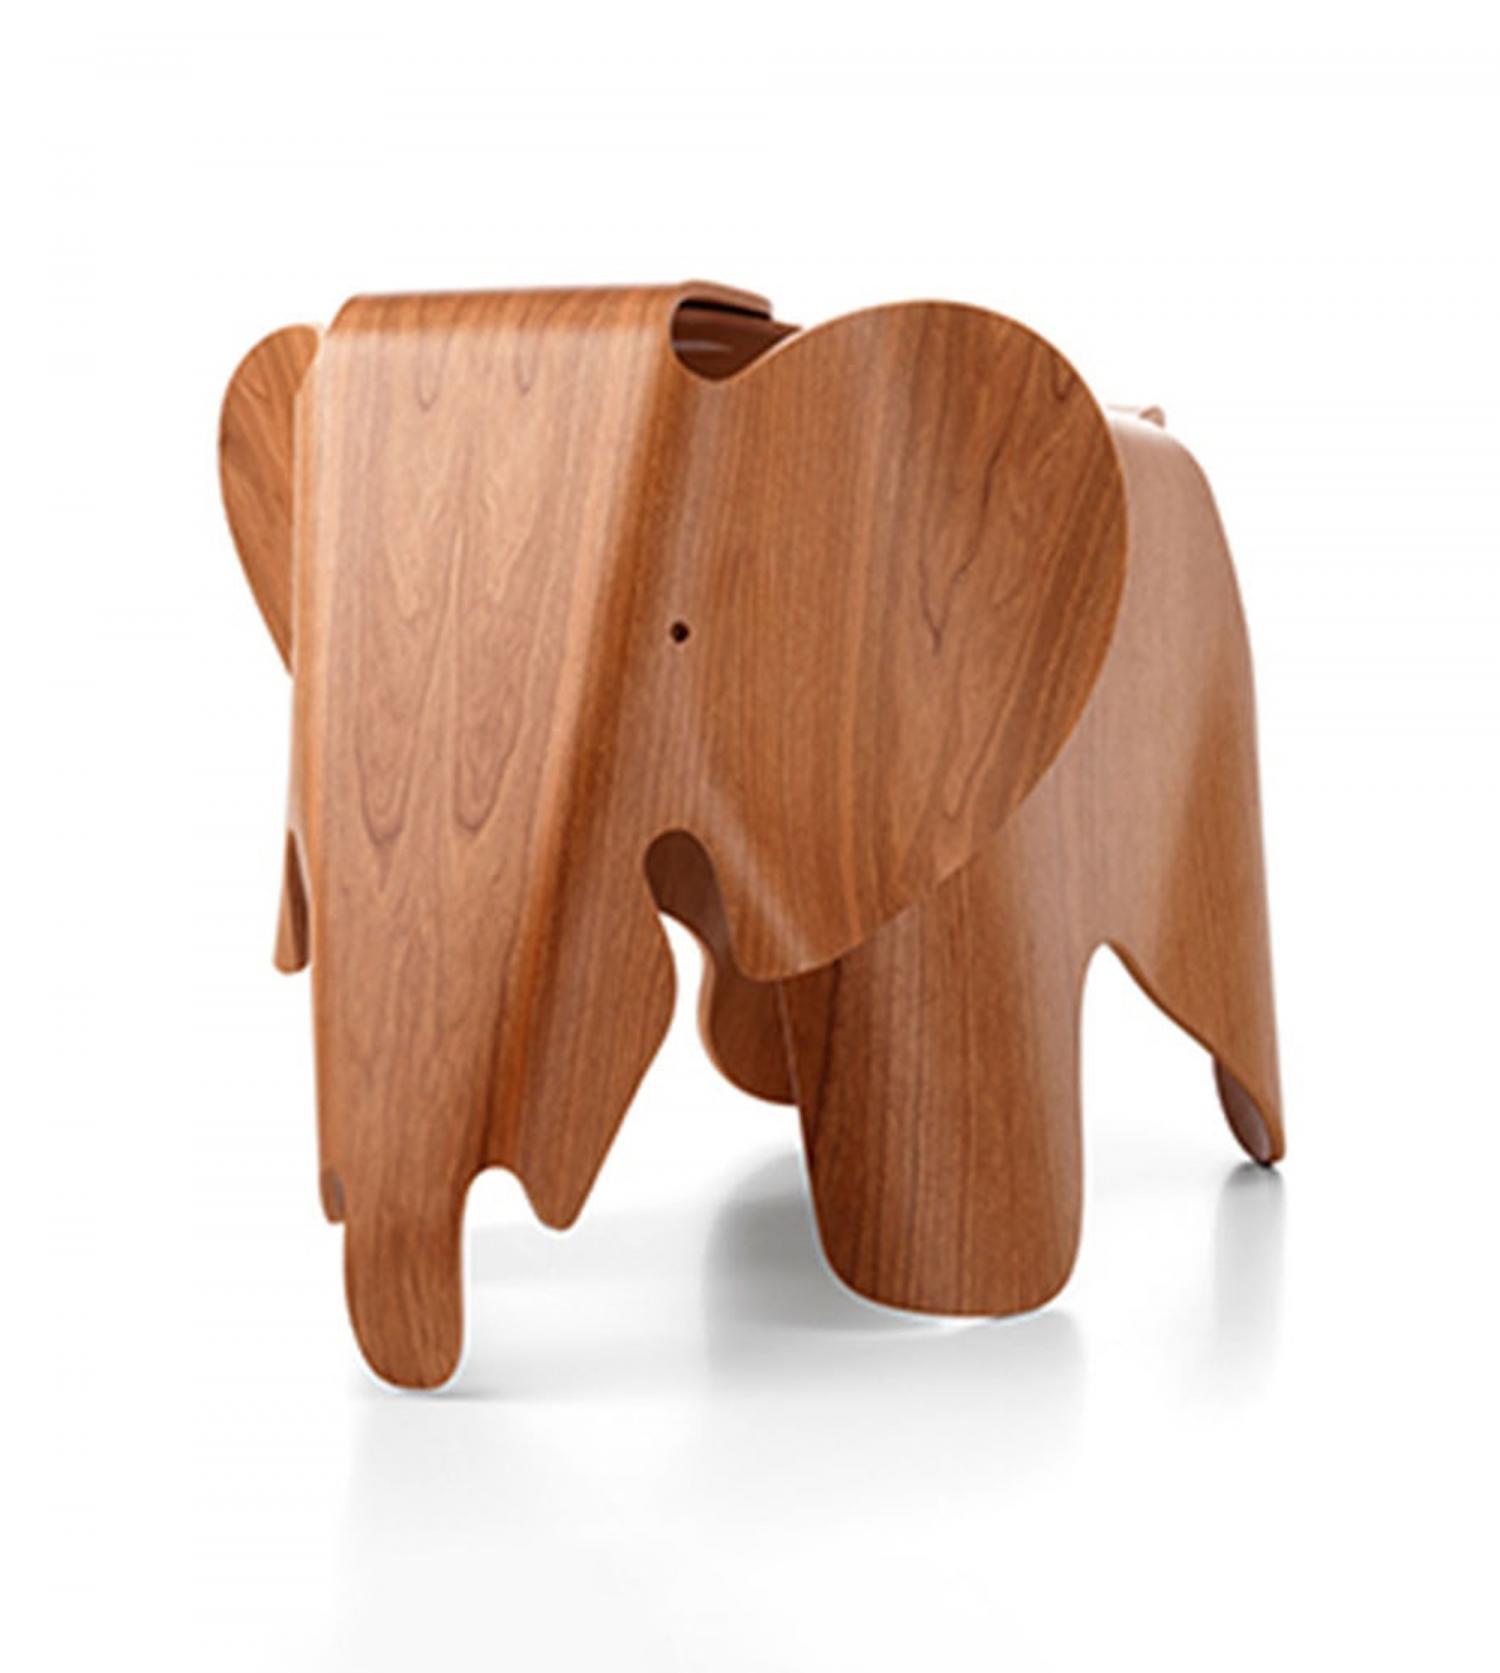 éléphant eames en contreplaqué / eames elephant plywood